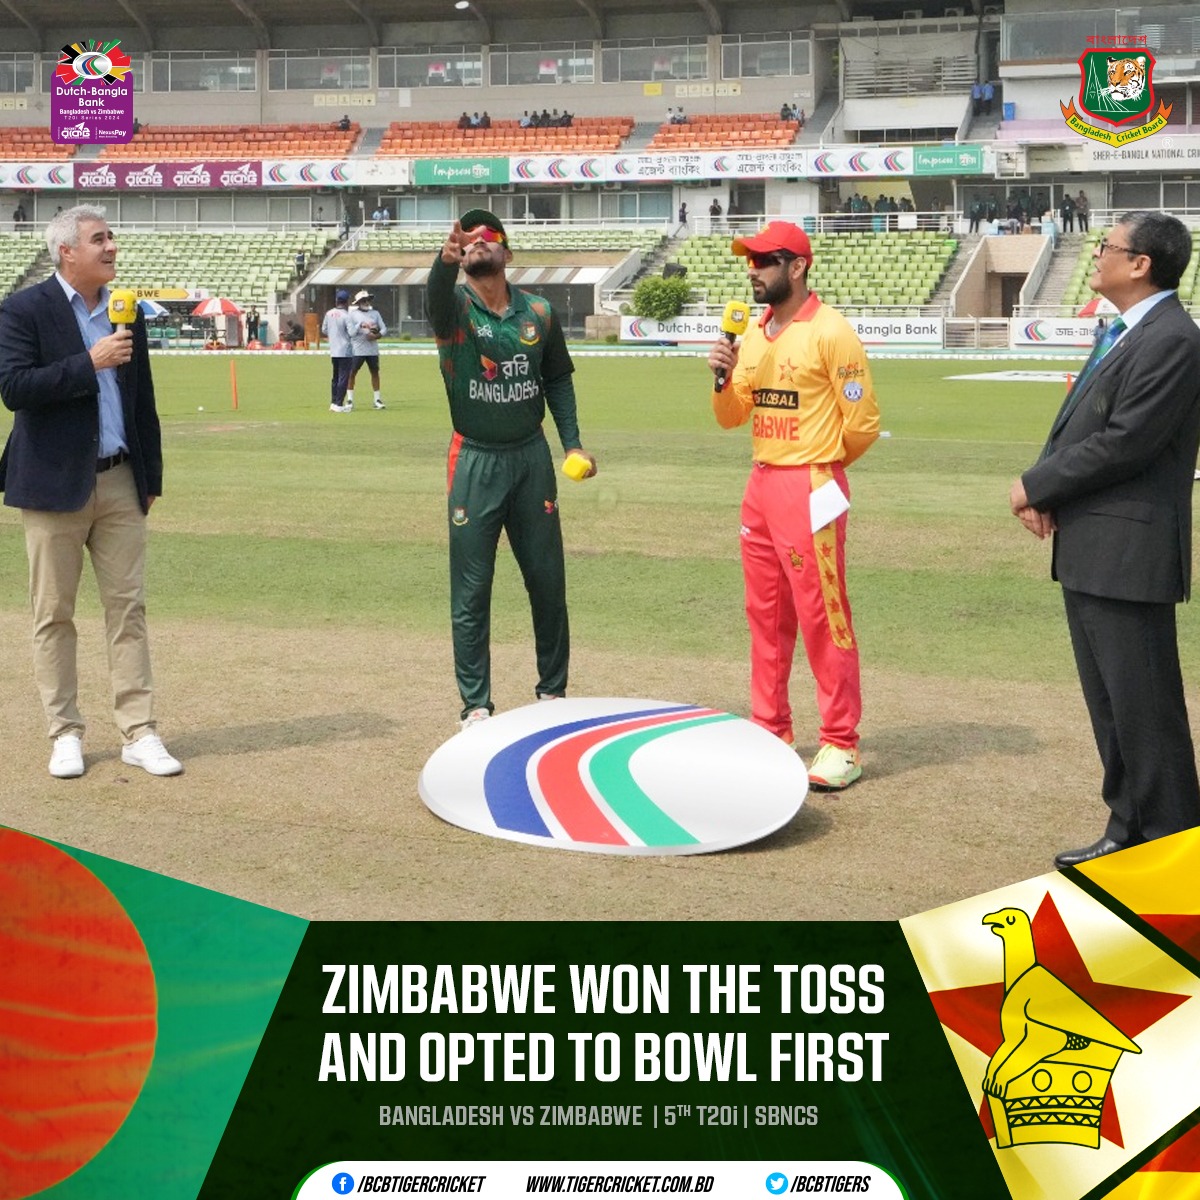 Dutch-Bangla Bank Bangladesh vs Zimbabwe T20i Series 2024 | 5th T20i 🏏 Zimbabwe won the toss and opted to bowl first Details 👉: tigercricket.com.bd/live-score/zim… #BANvZIM #BCB #Cricket #BDCricket #livecricket #Bangladesh